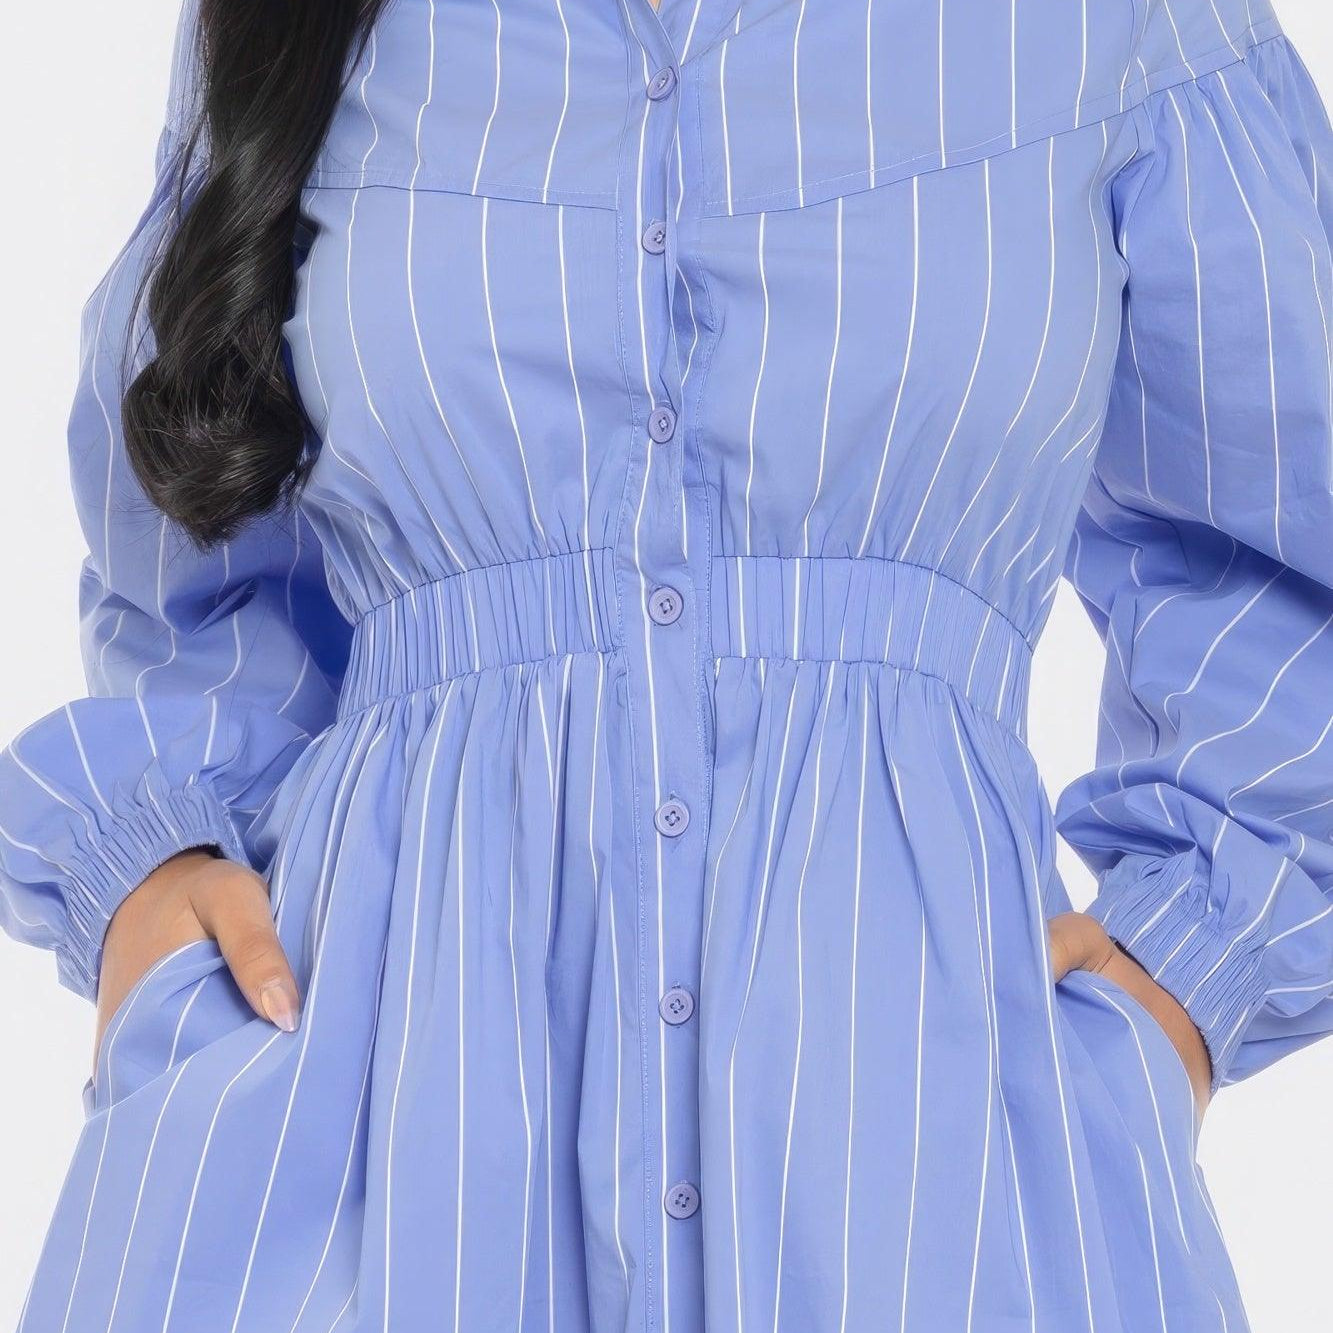 Women's Dresses Women's Blue Striped Mini Dress with Pockets